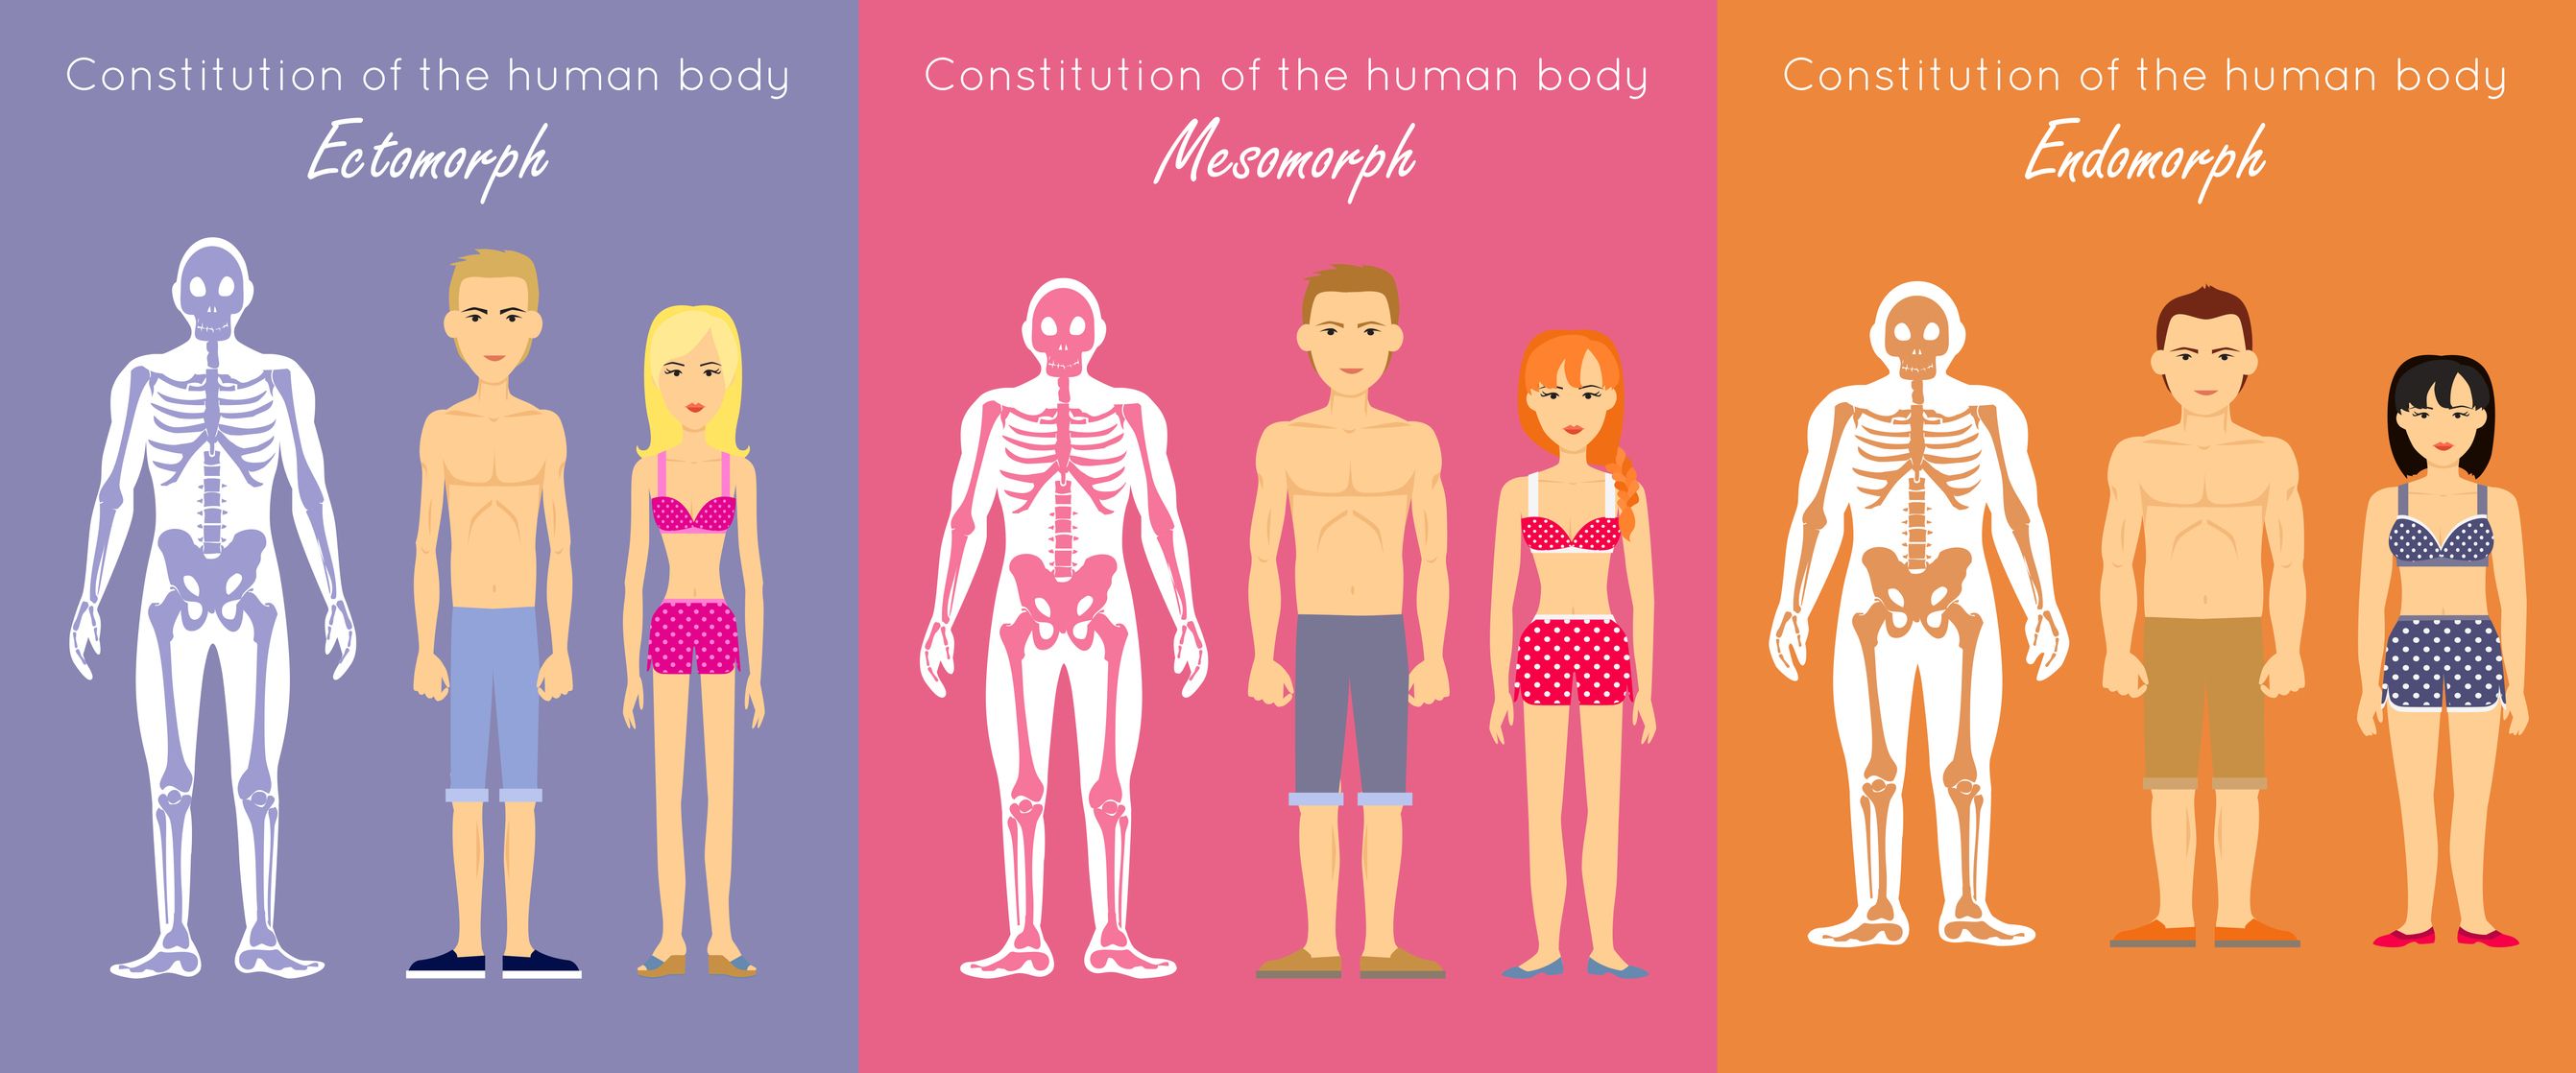 Human body types. Mesomorphic athletic body and full endomorphic